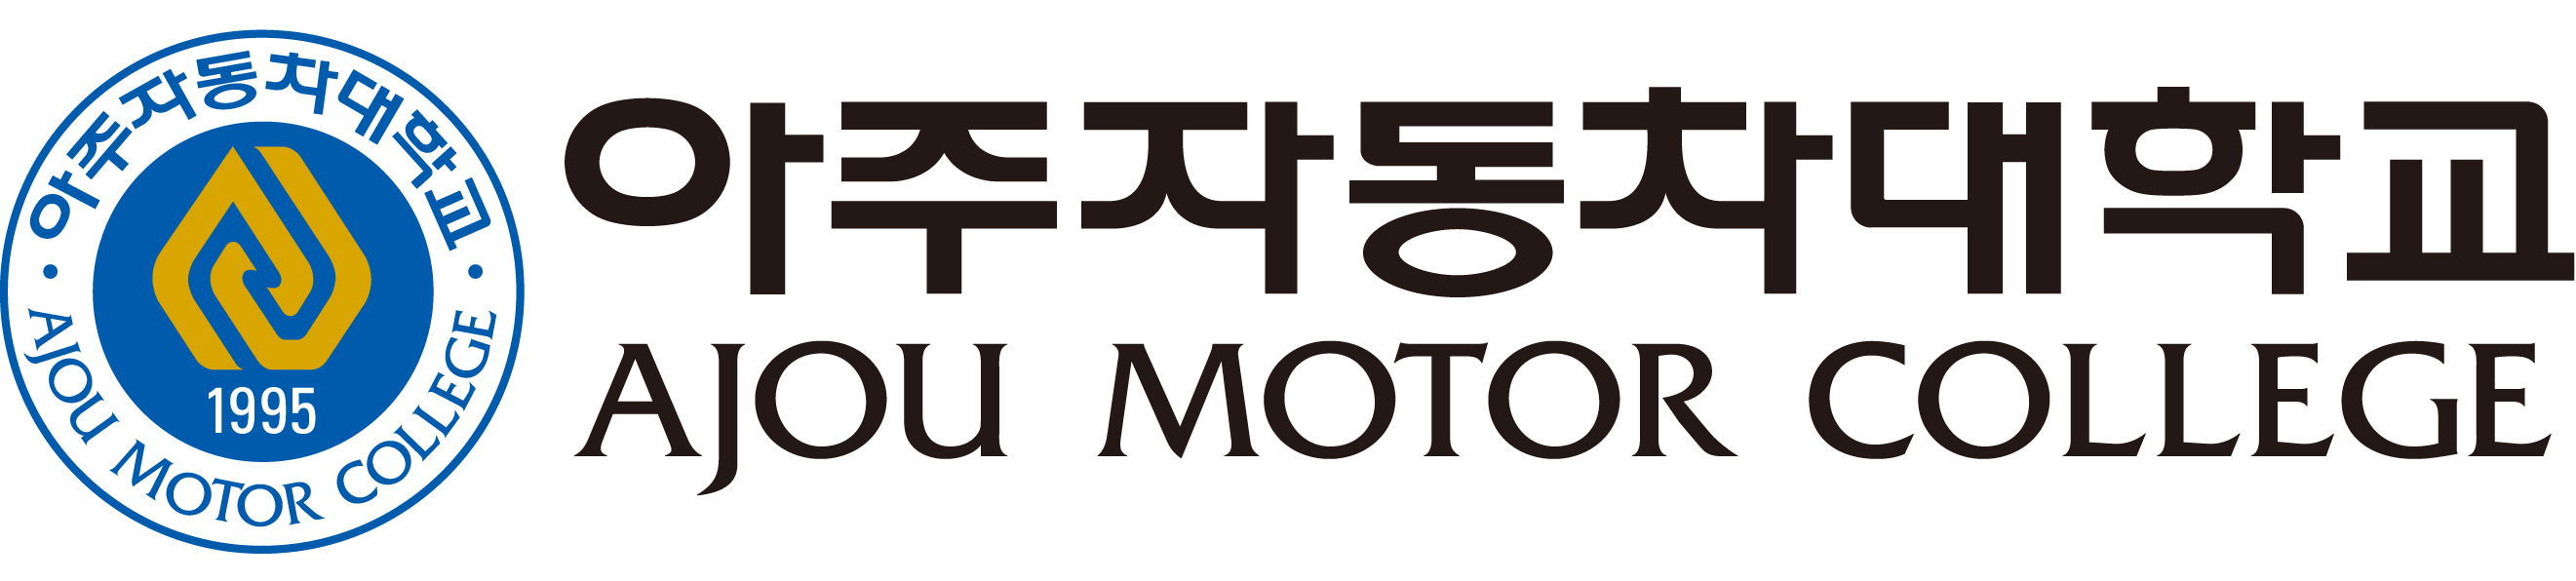 AJOU MOTOR COLLEGE Logo